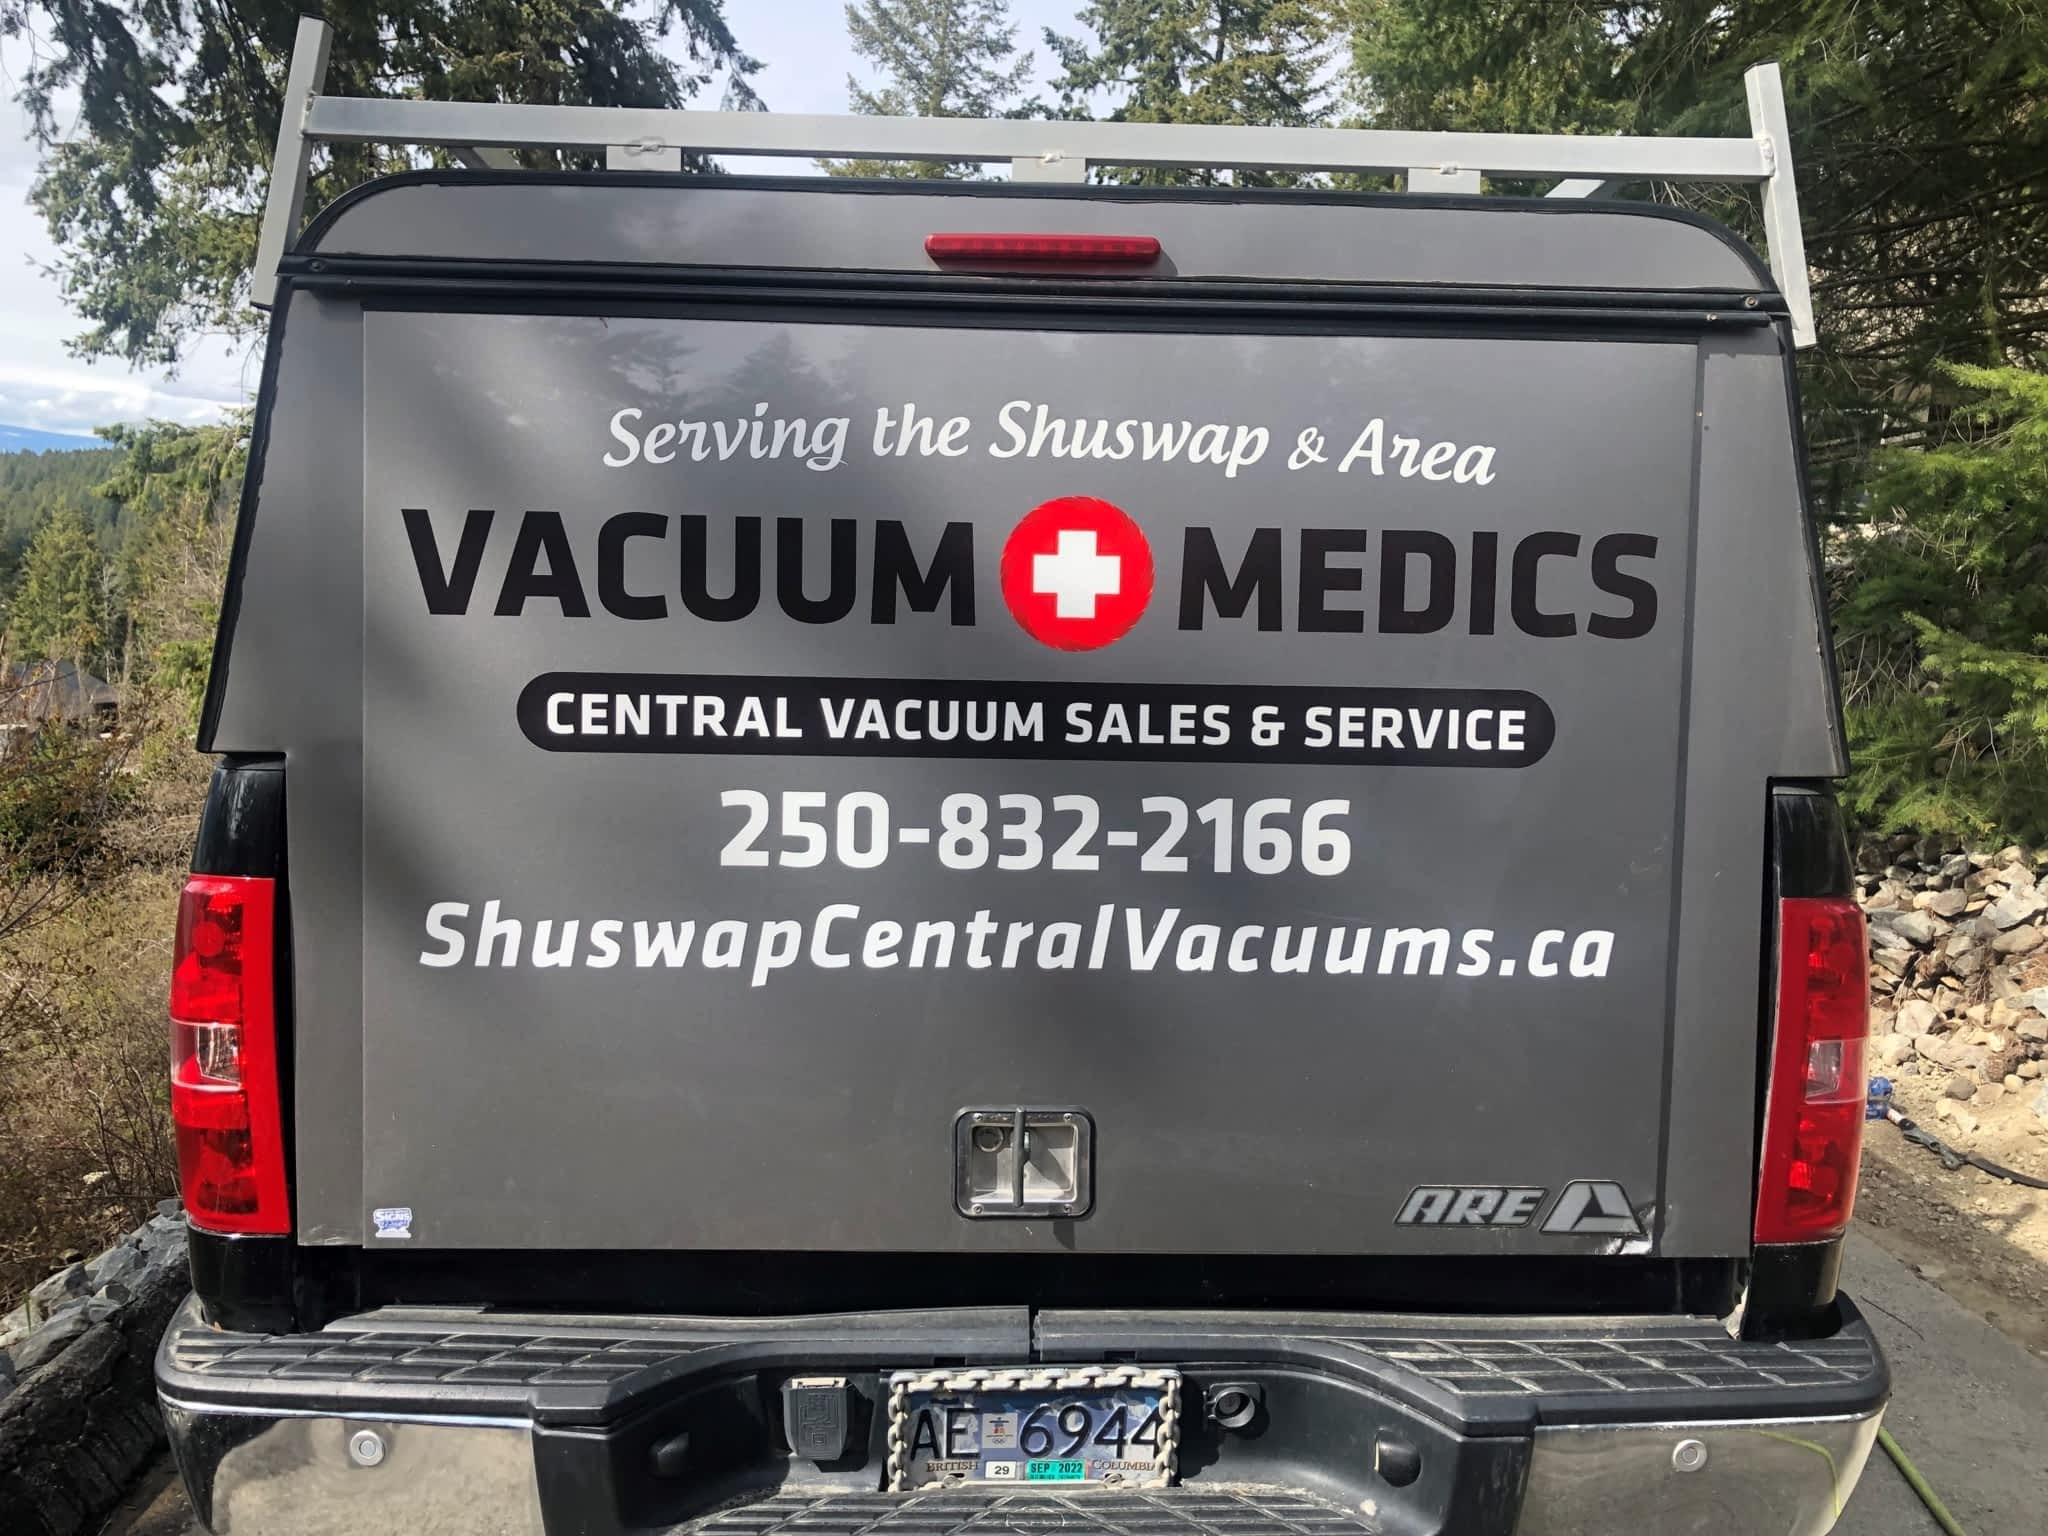 photo Vacuum Medics